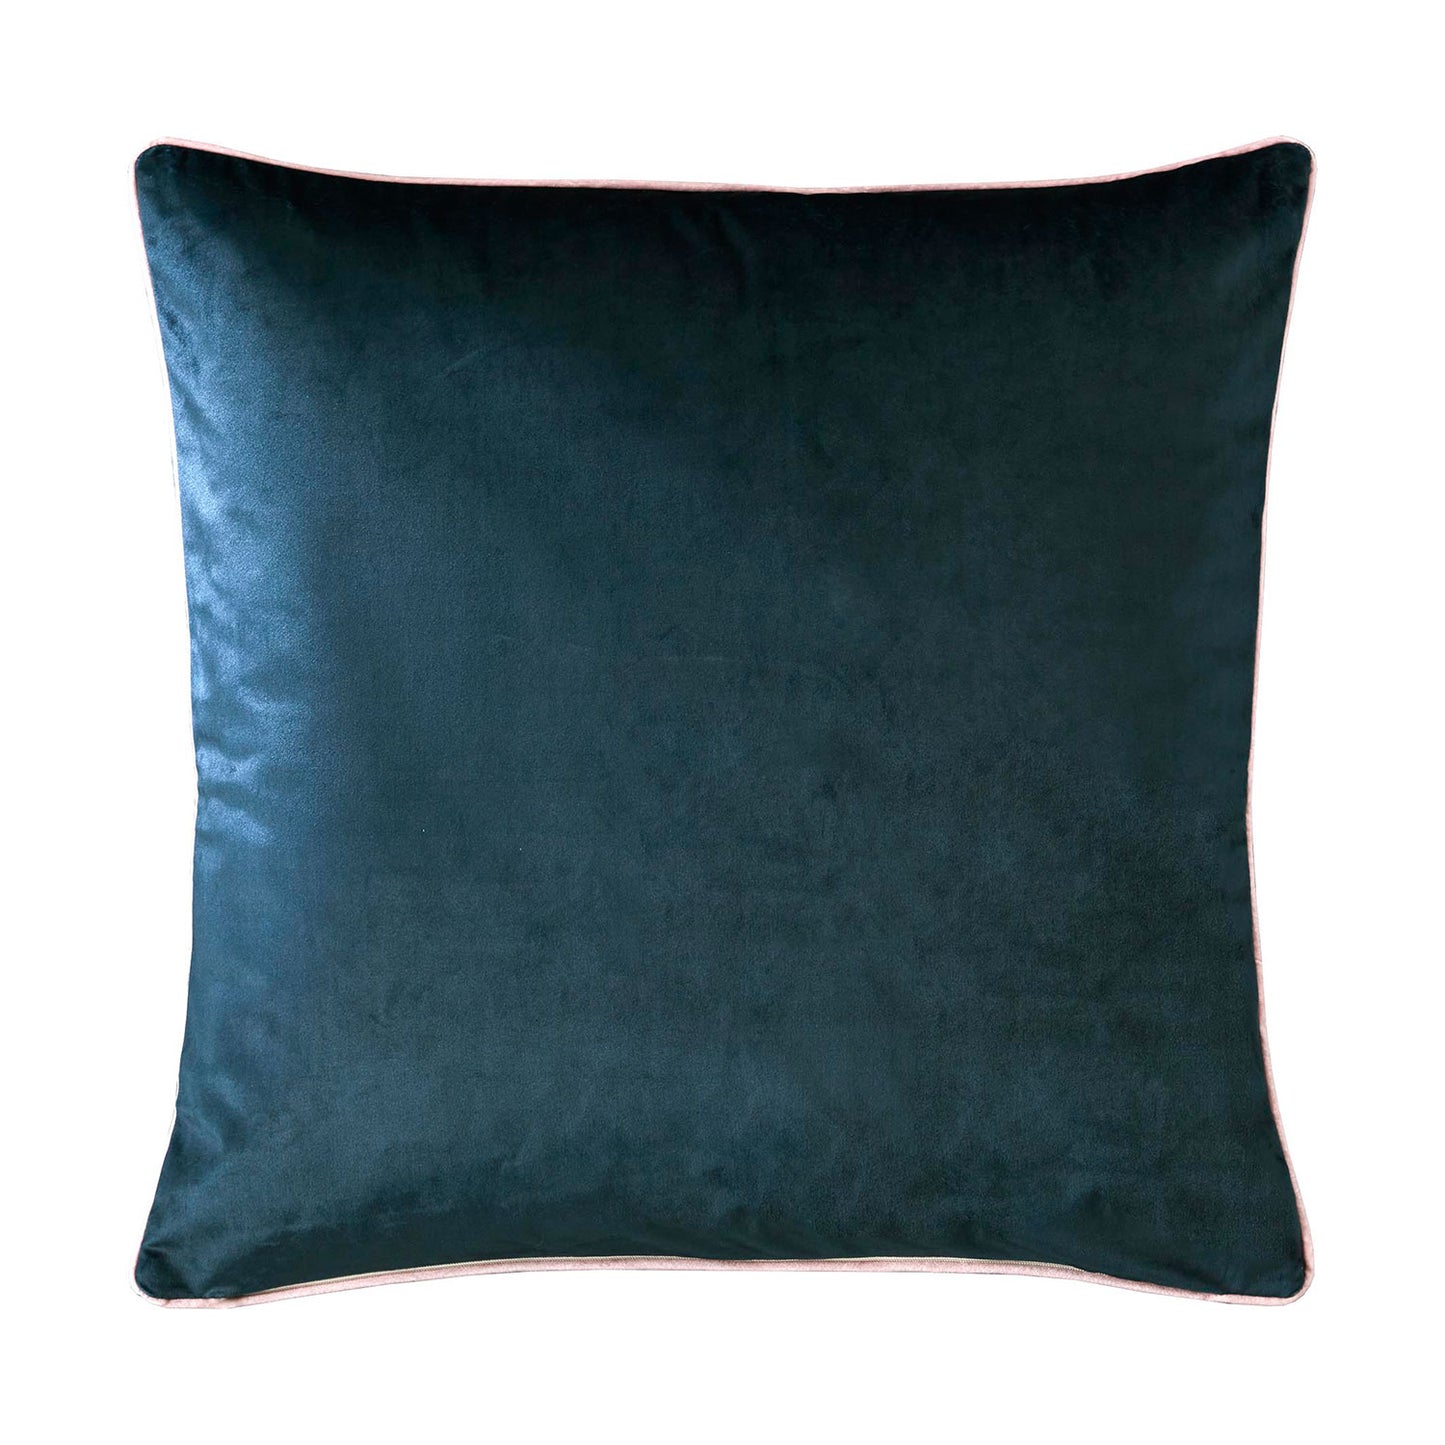 Clarissa Hulse Tania's Garden Velvet Feather Cushion (50cm x 50cm)